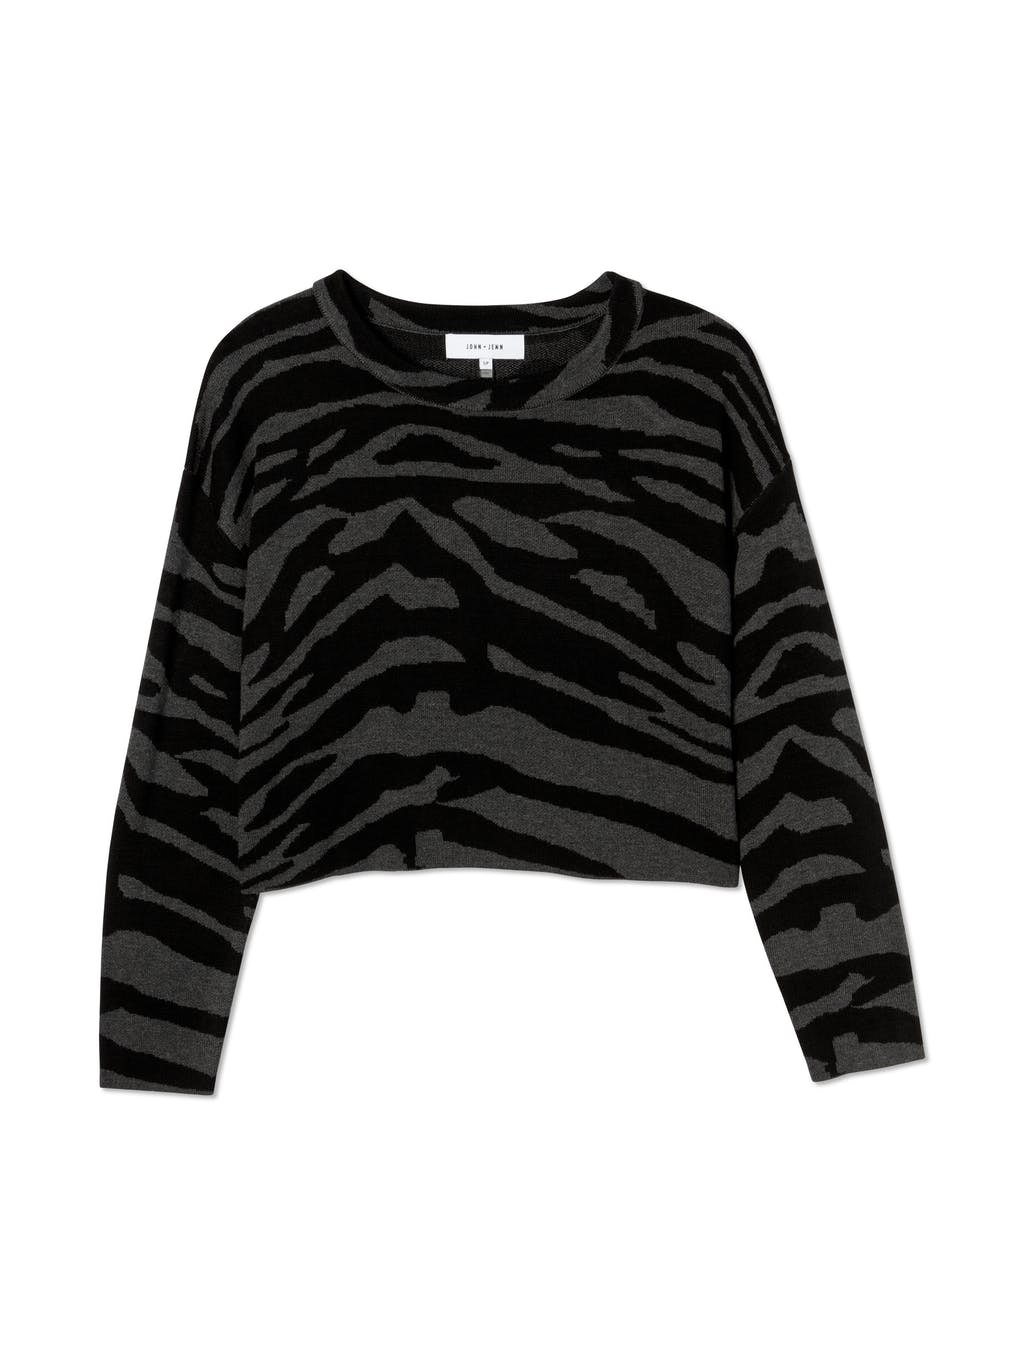 Marco Textured Zebra Sweater